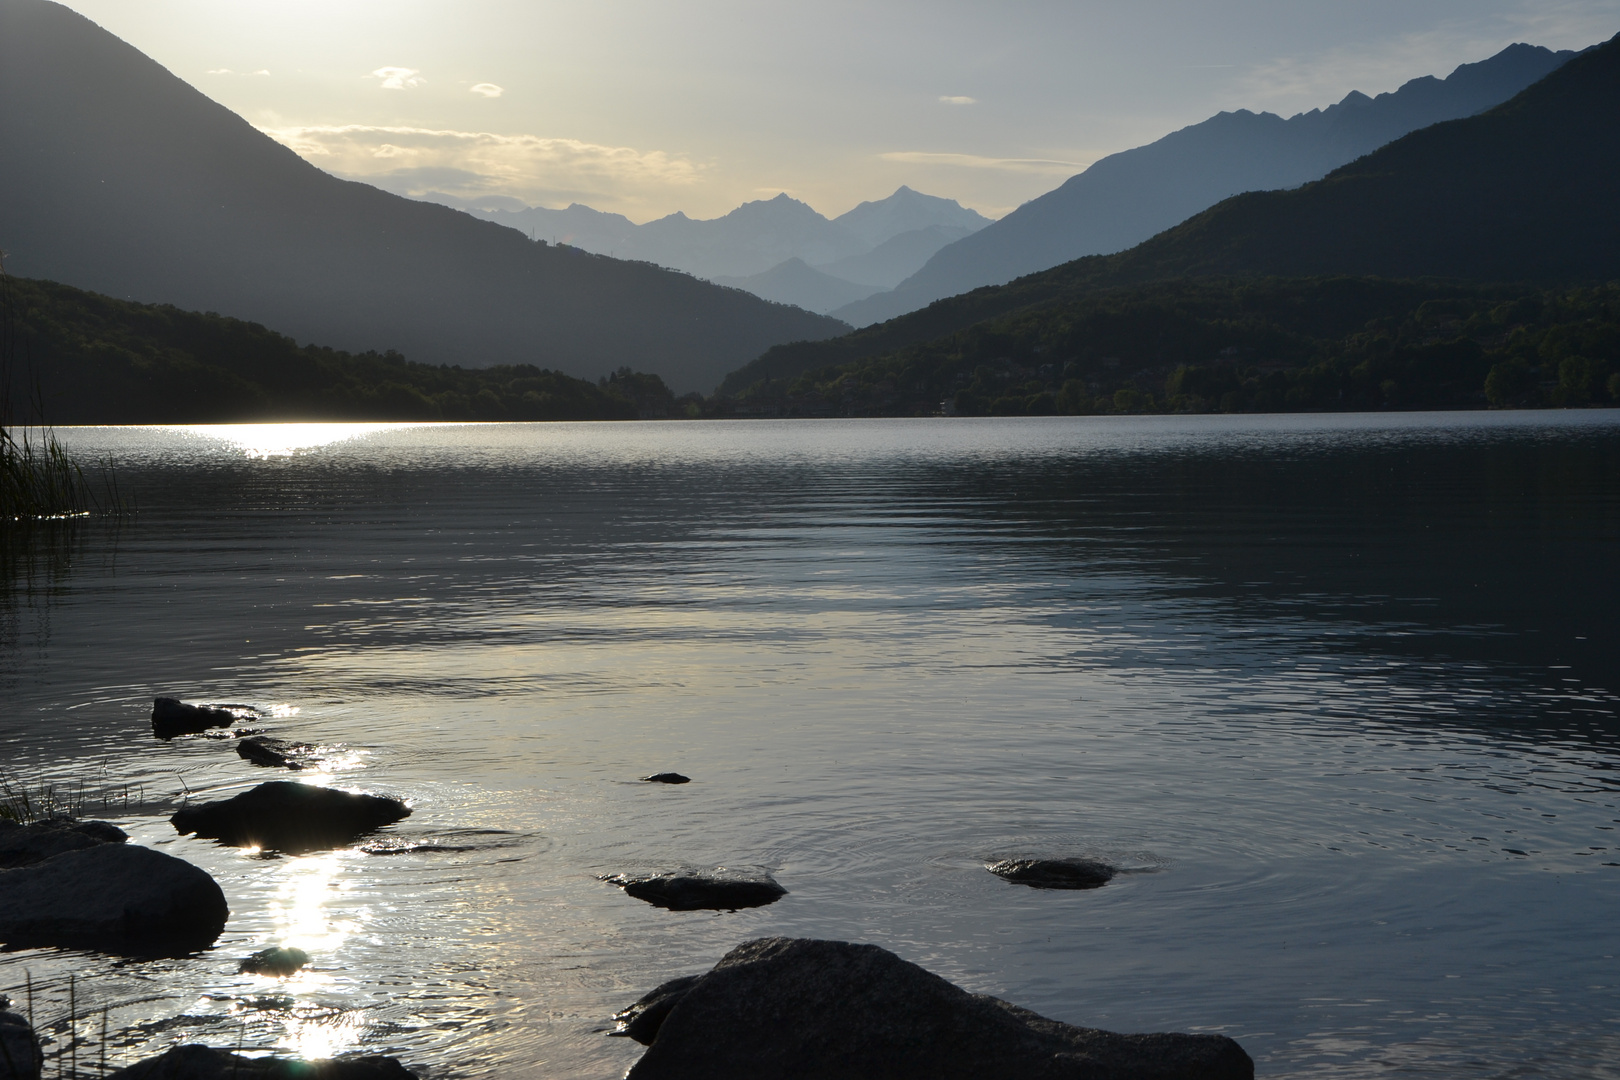 Lago Mergozzo im Sonnenuntergang